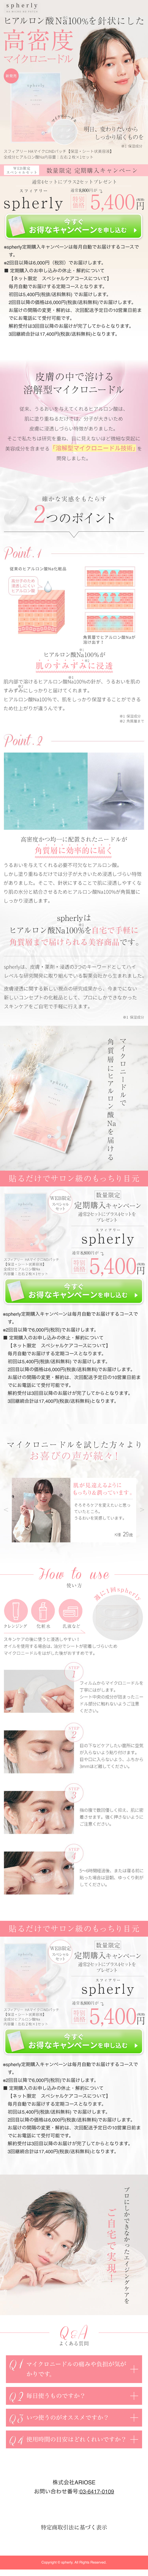 spherly_sp_1